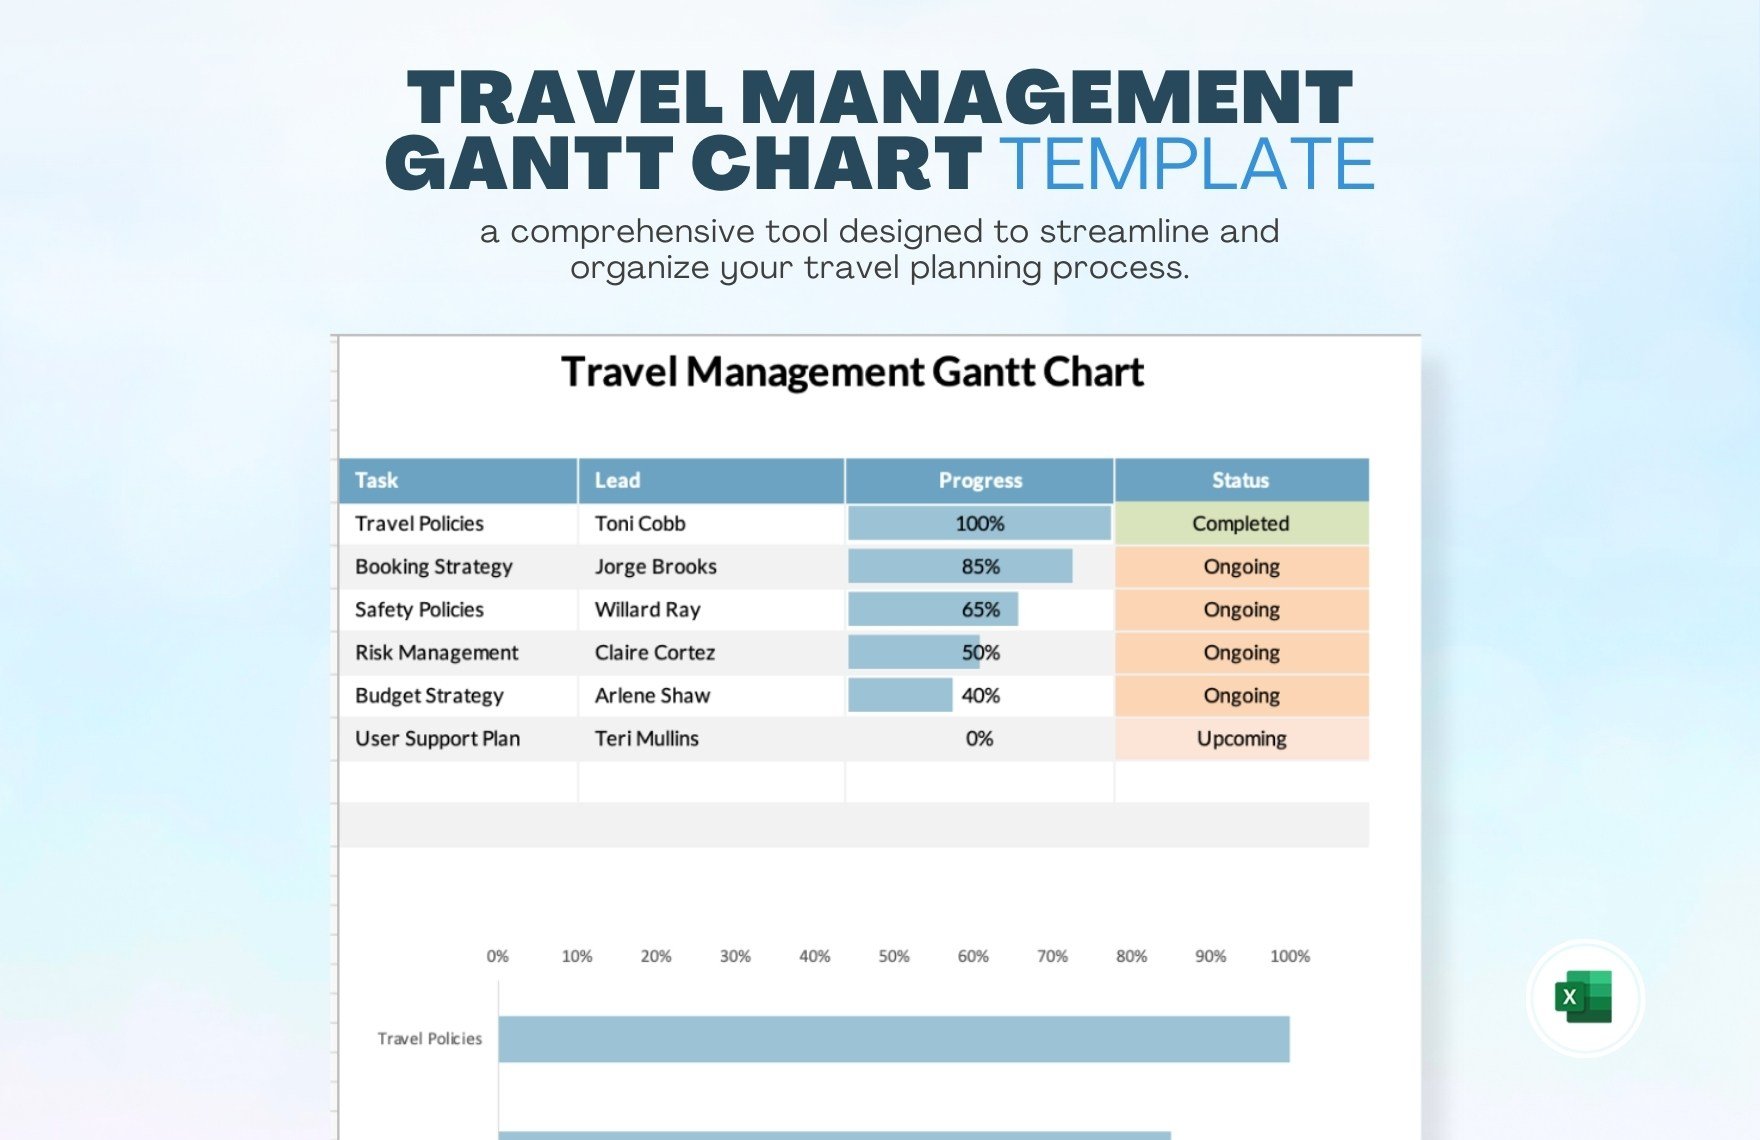 Travel Management Gantt Chart Template in Excel